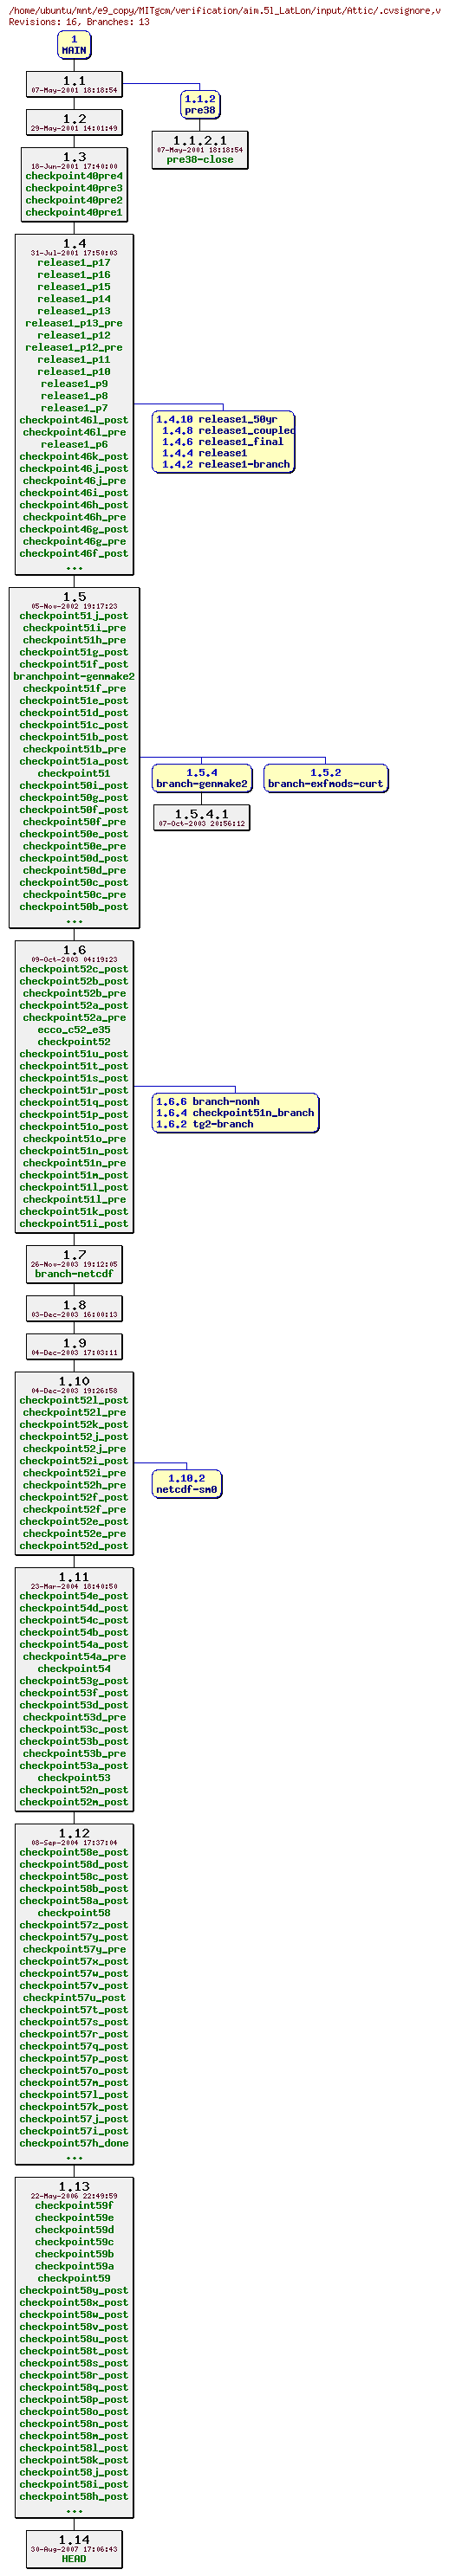 Revisions of MITgcm/verification/aim.5l_LatLon/input/.cvsignore